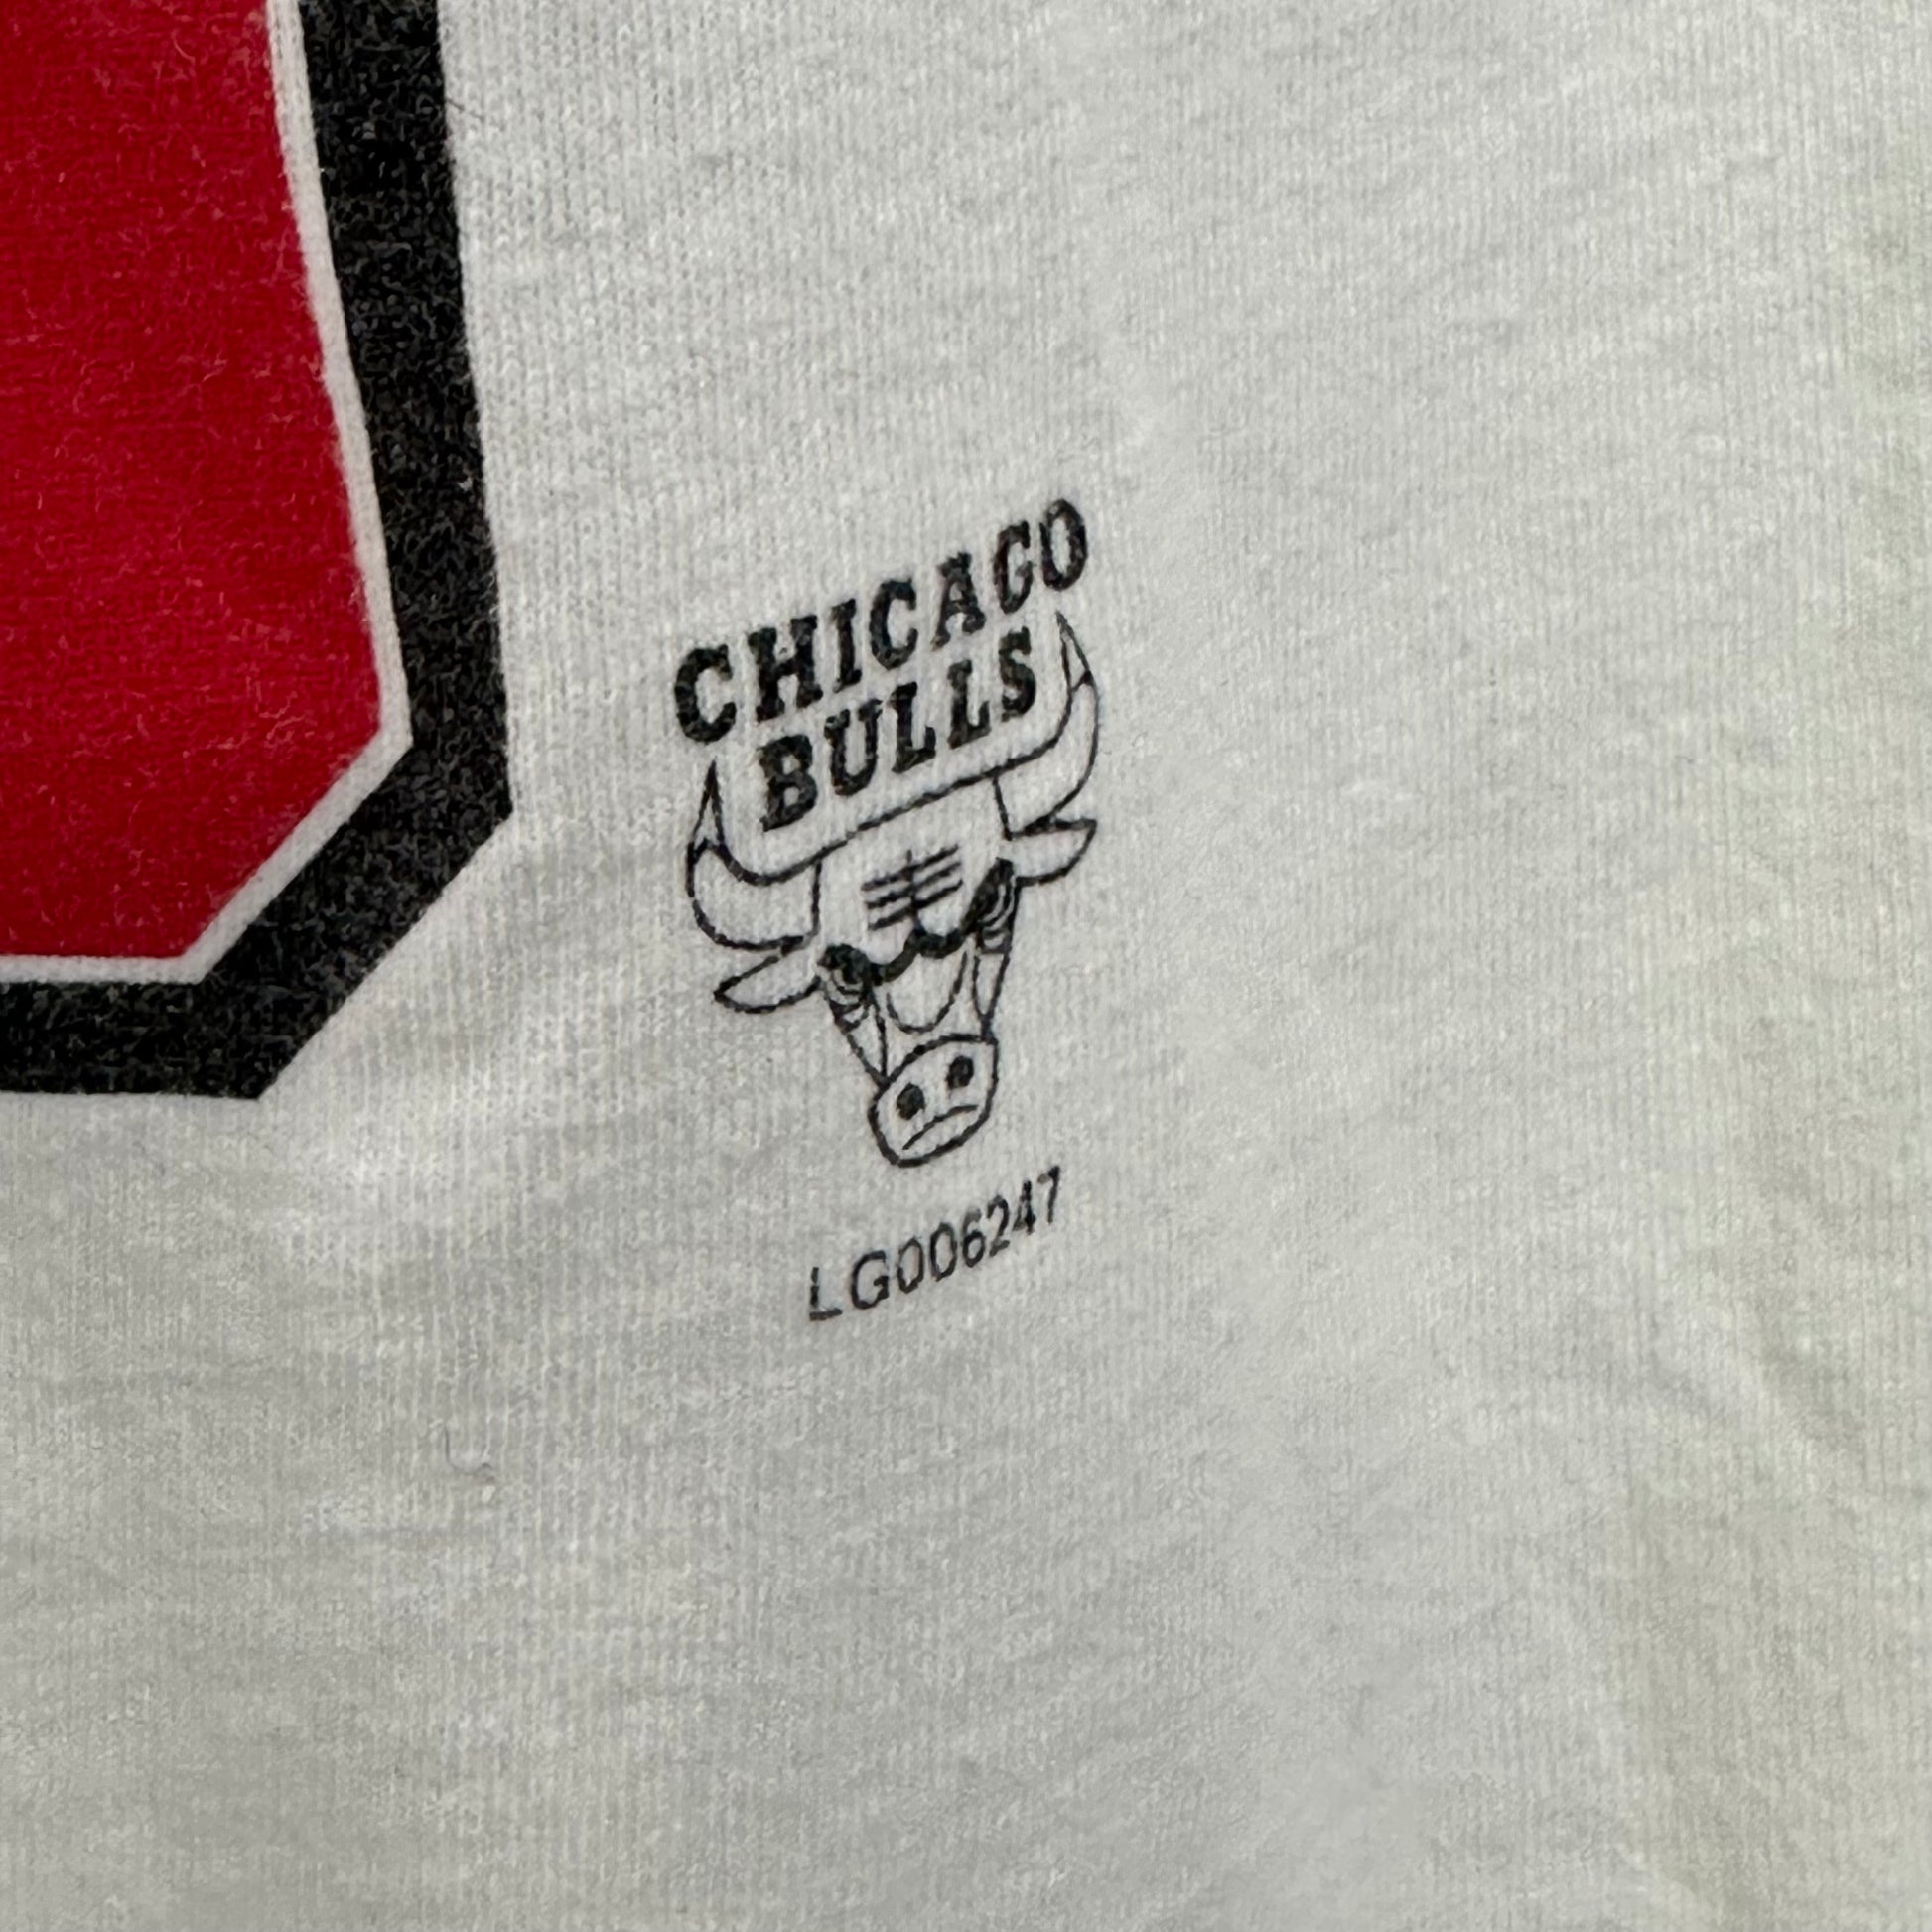 Vintage 1998 Lee NBA Finals Chicago Bulls 6 Time Champion T Shirt XL